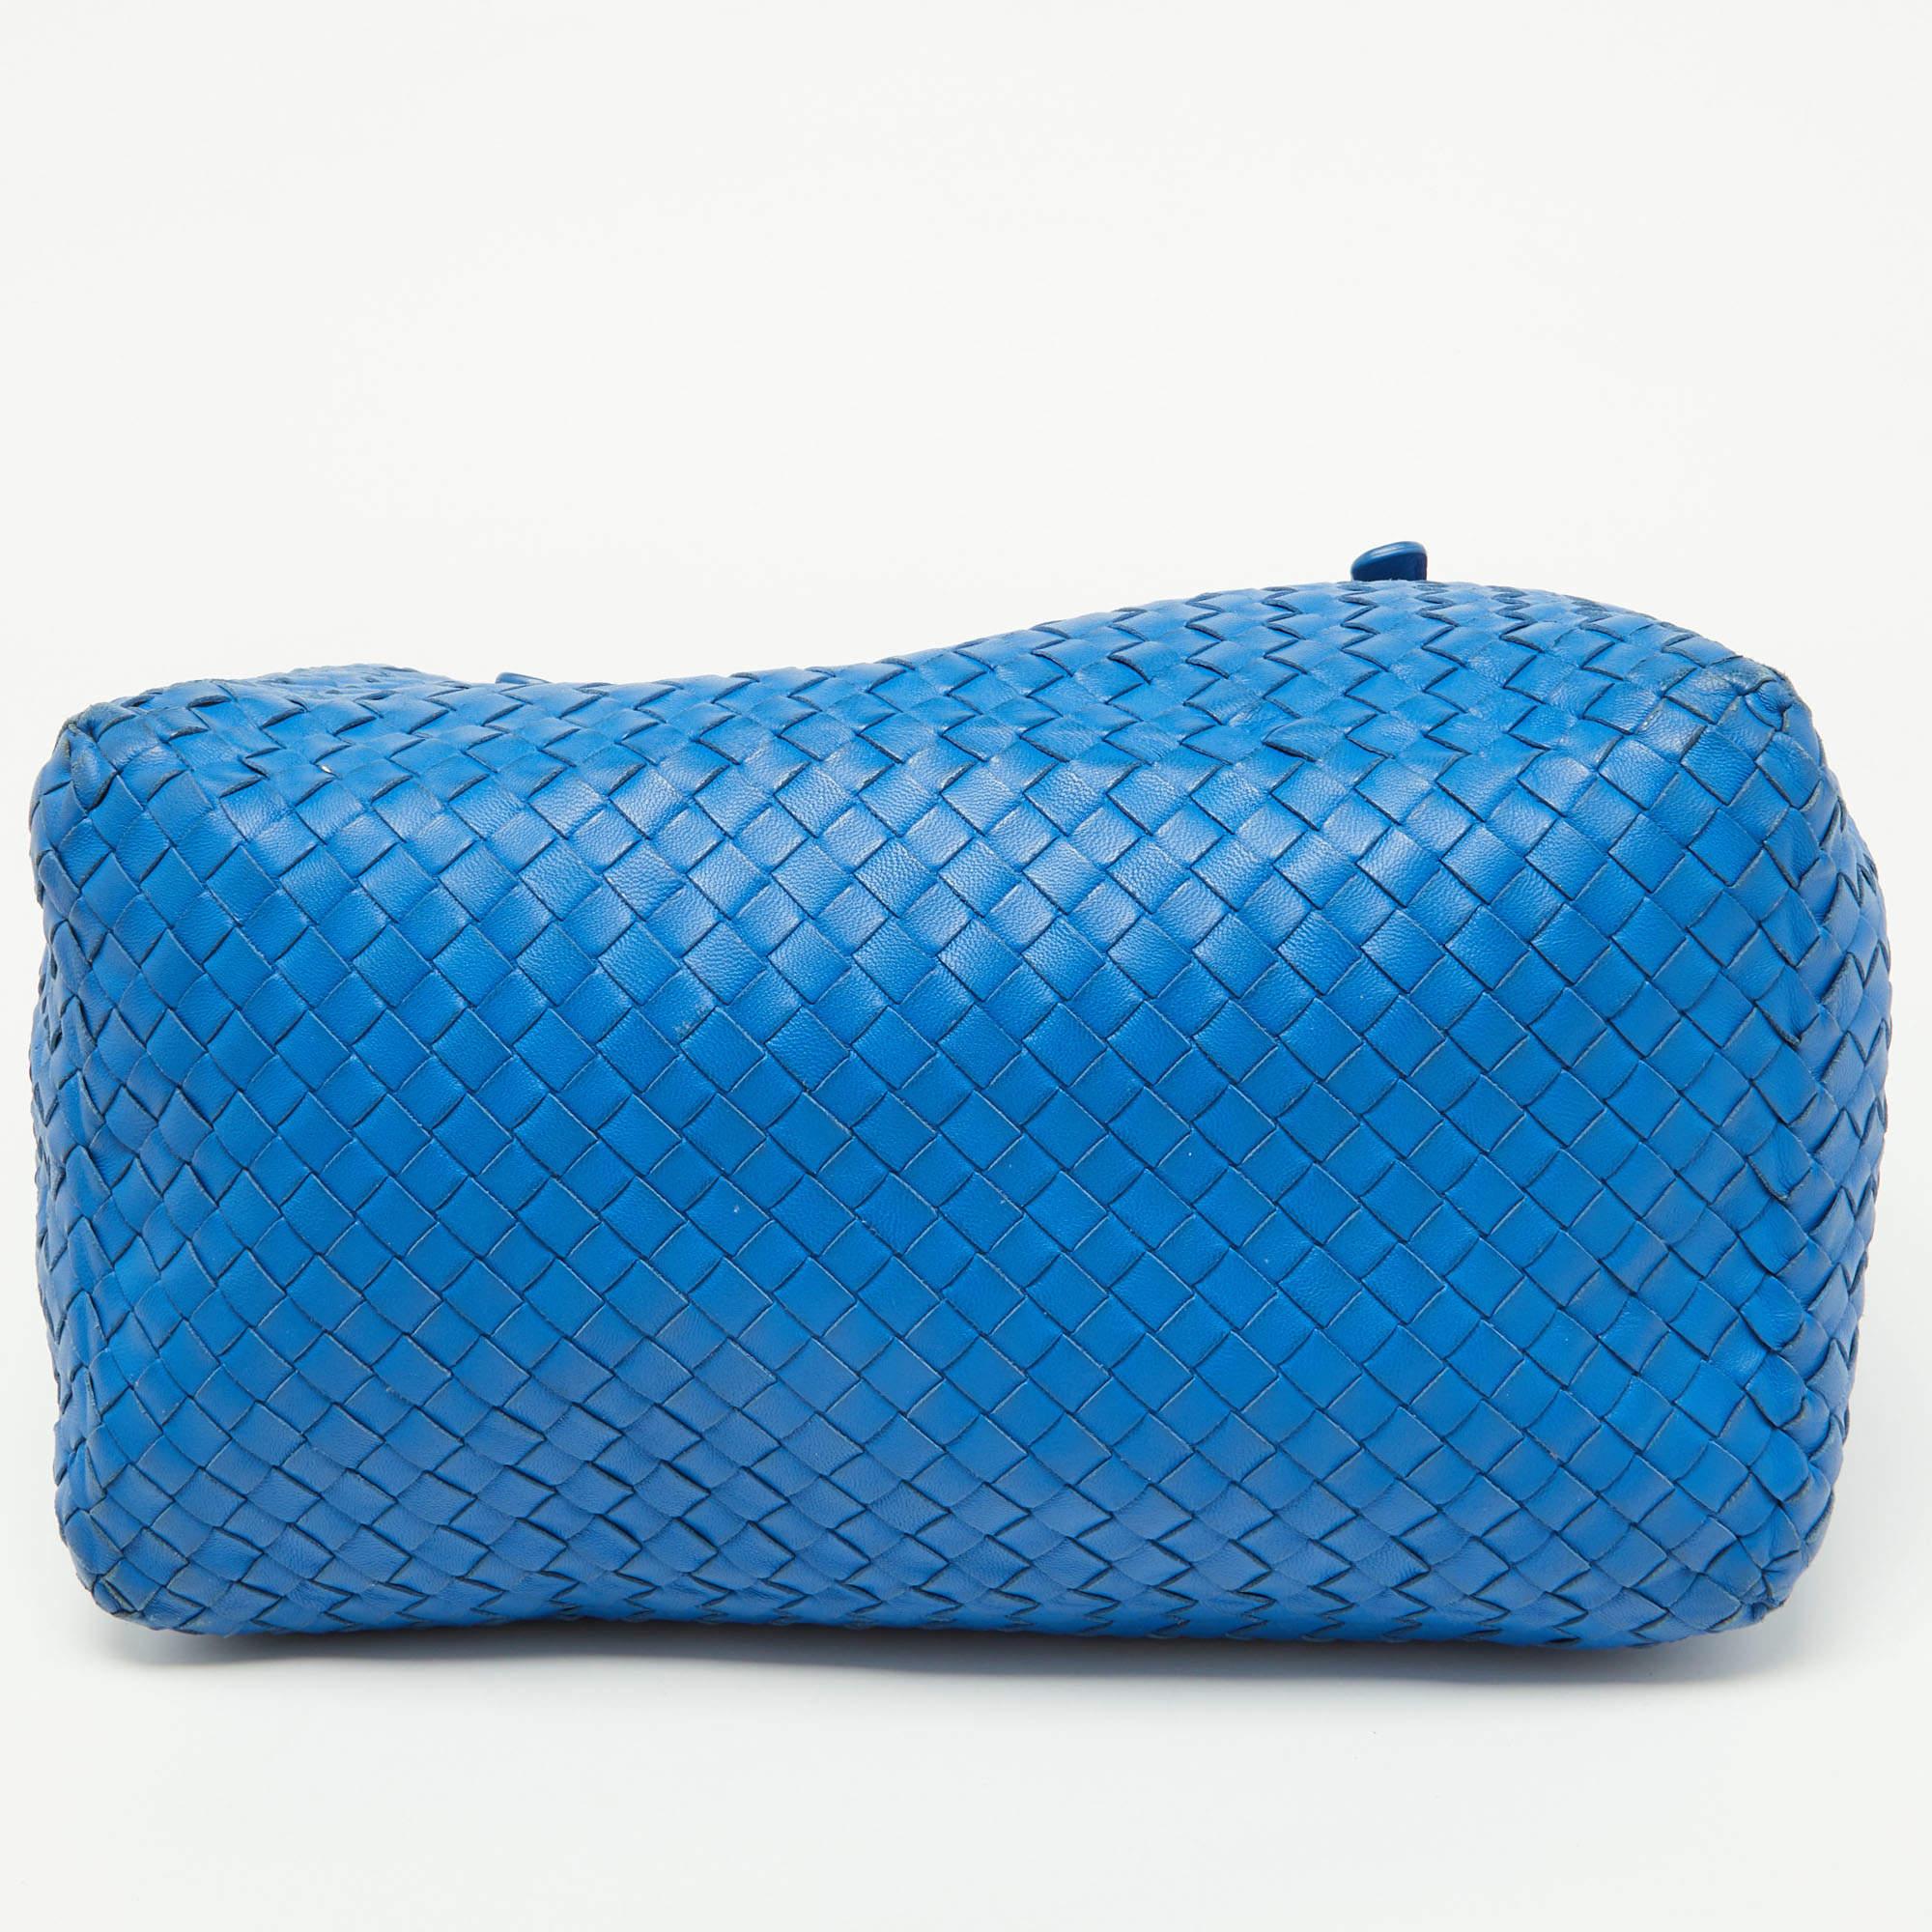 Bottega Veneta Blue Intrecciato Leather Cesta Bag 1